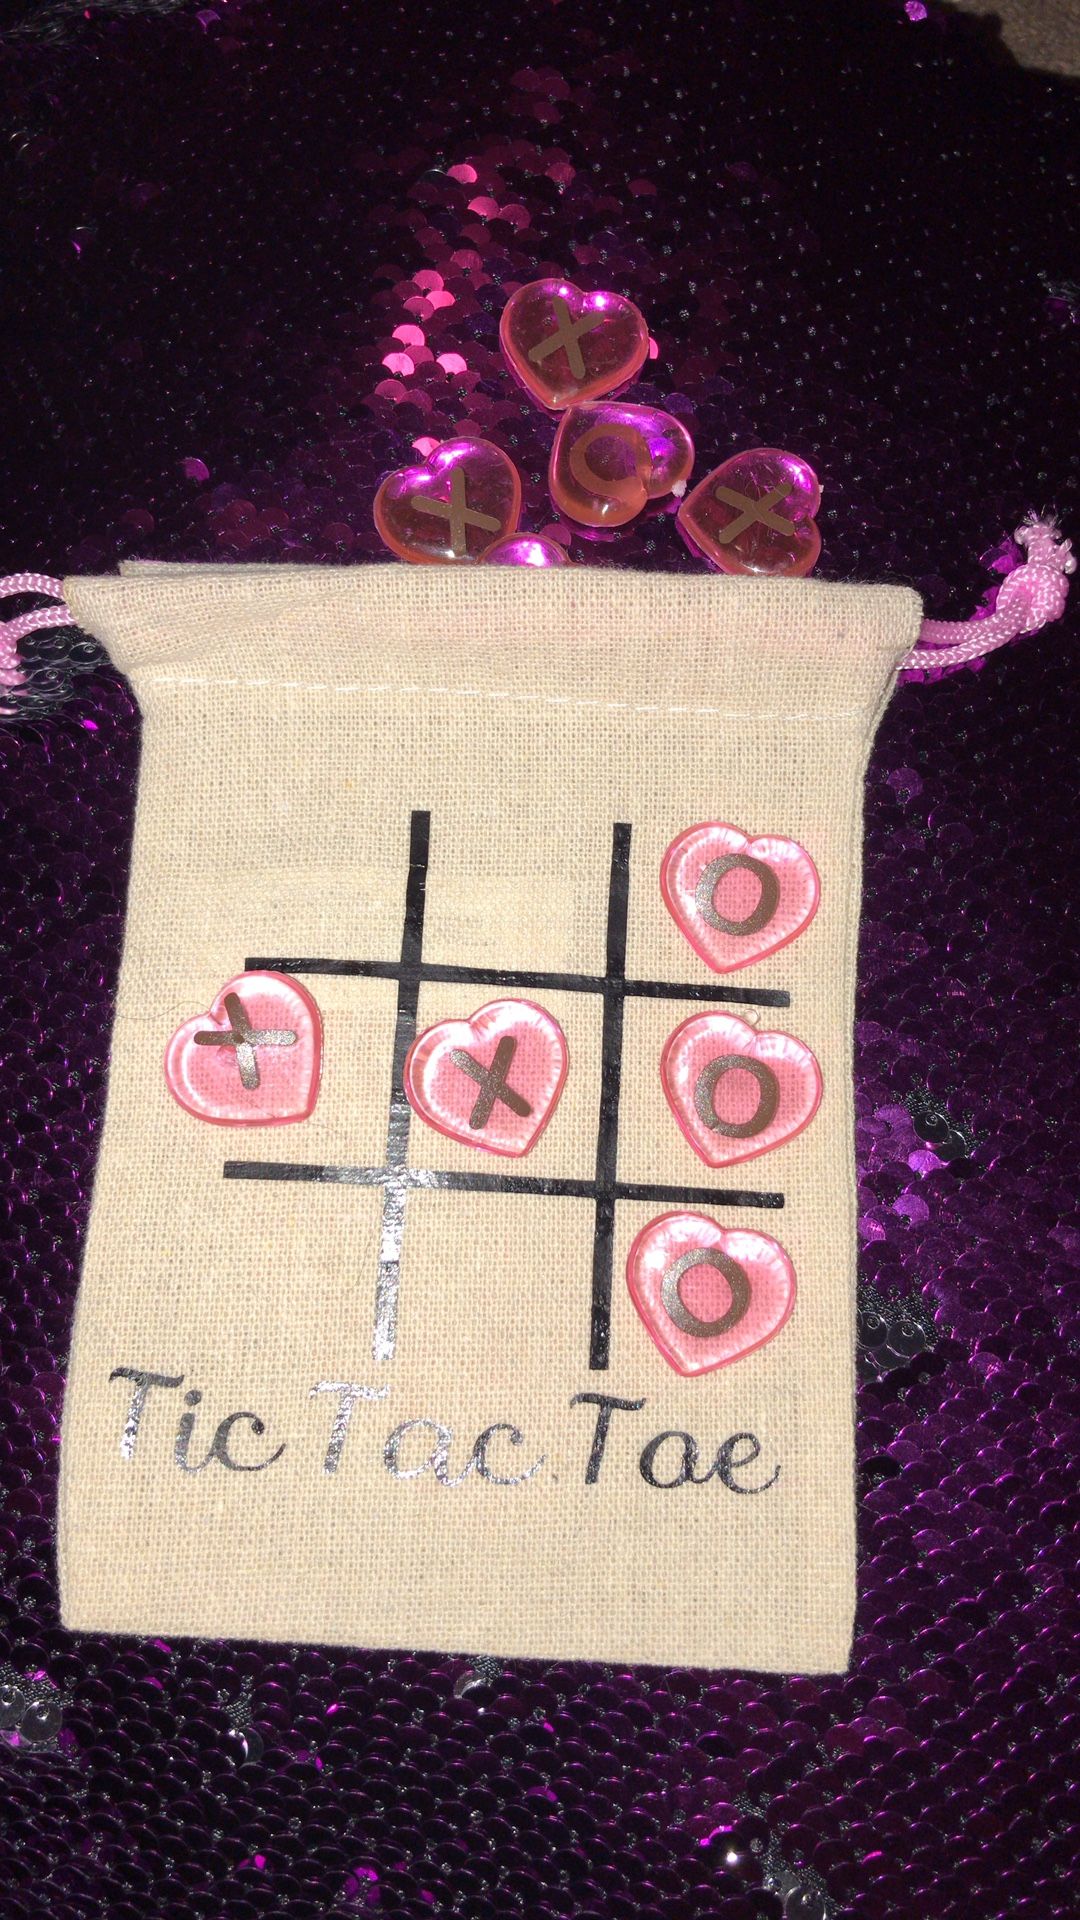 Valentine’s Day Tic Tac Toe Game